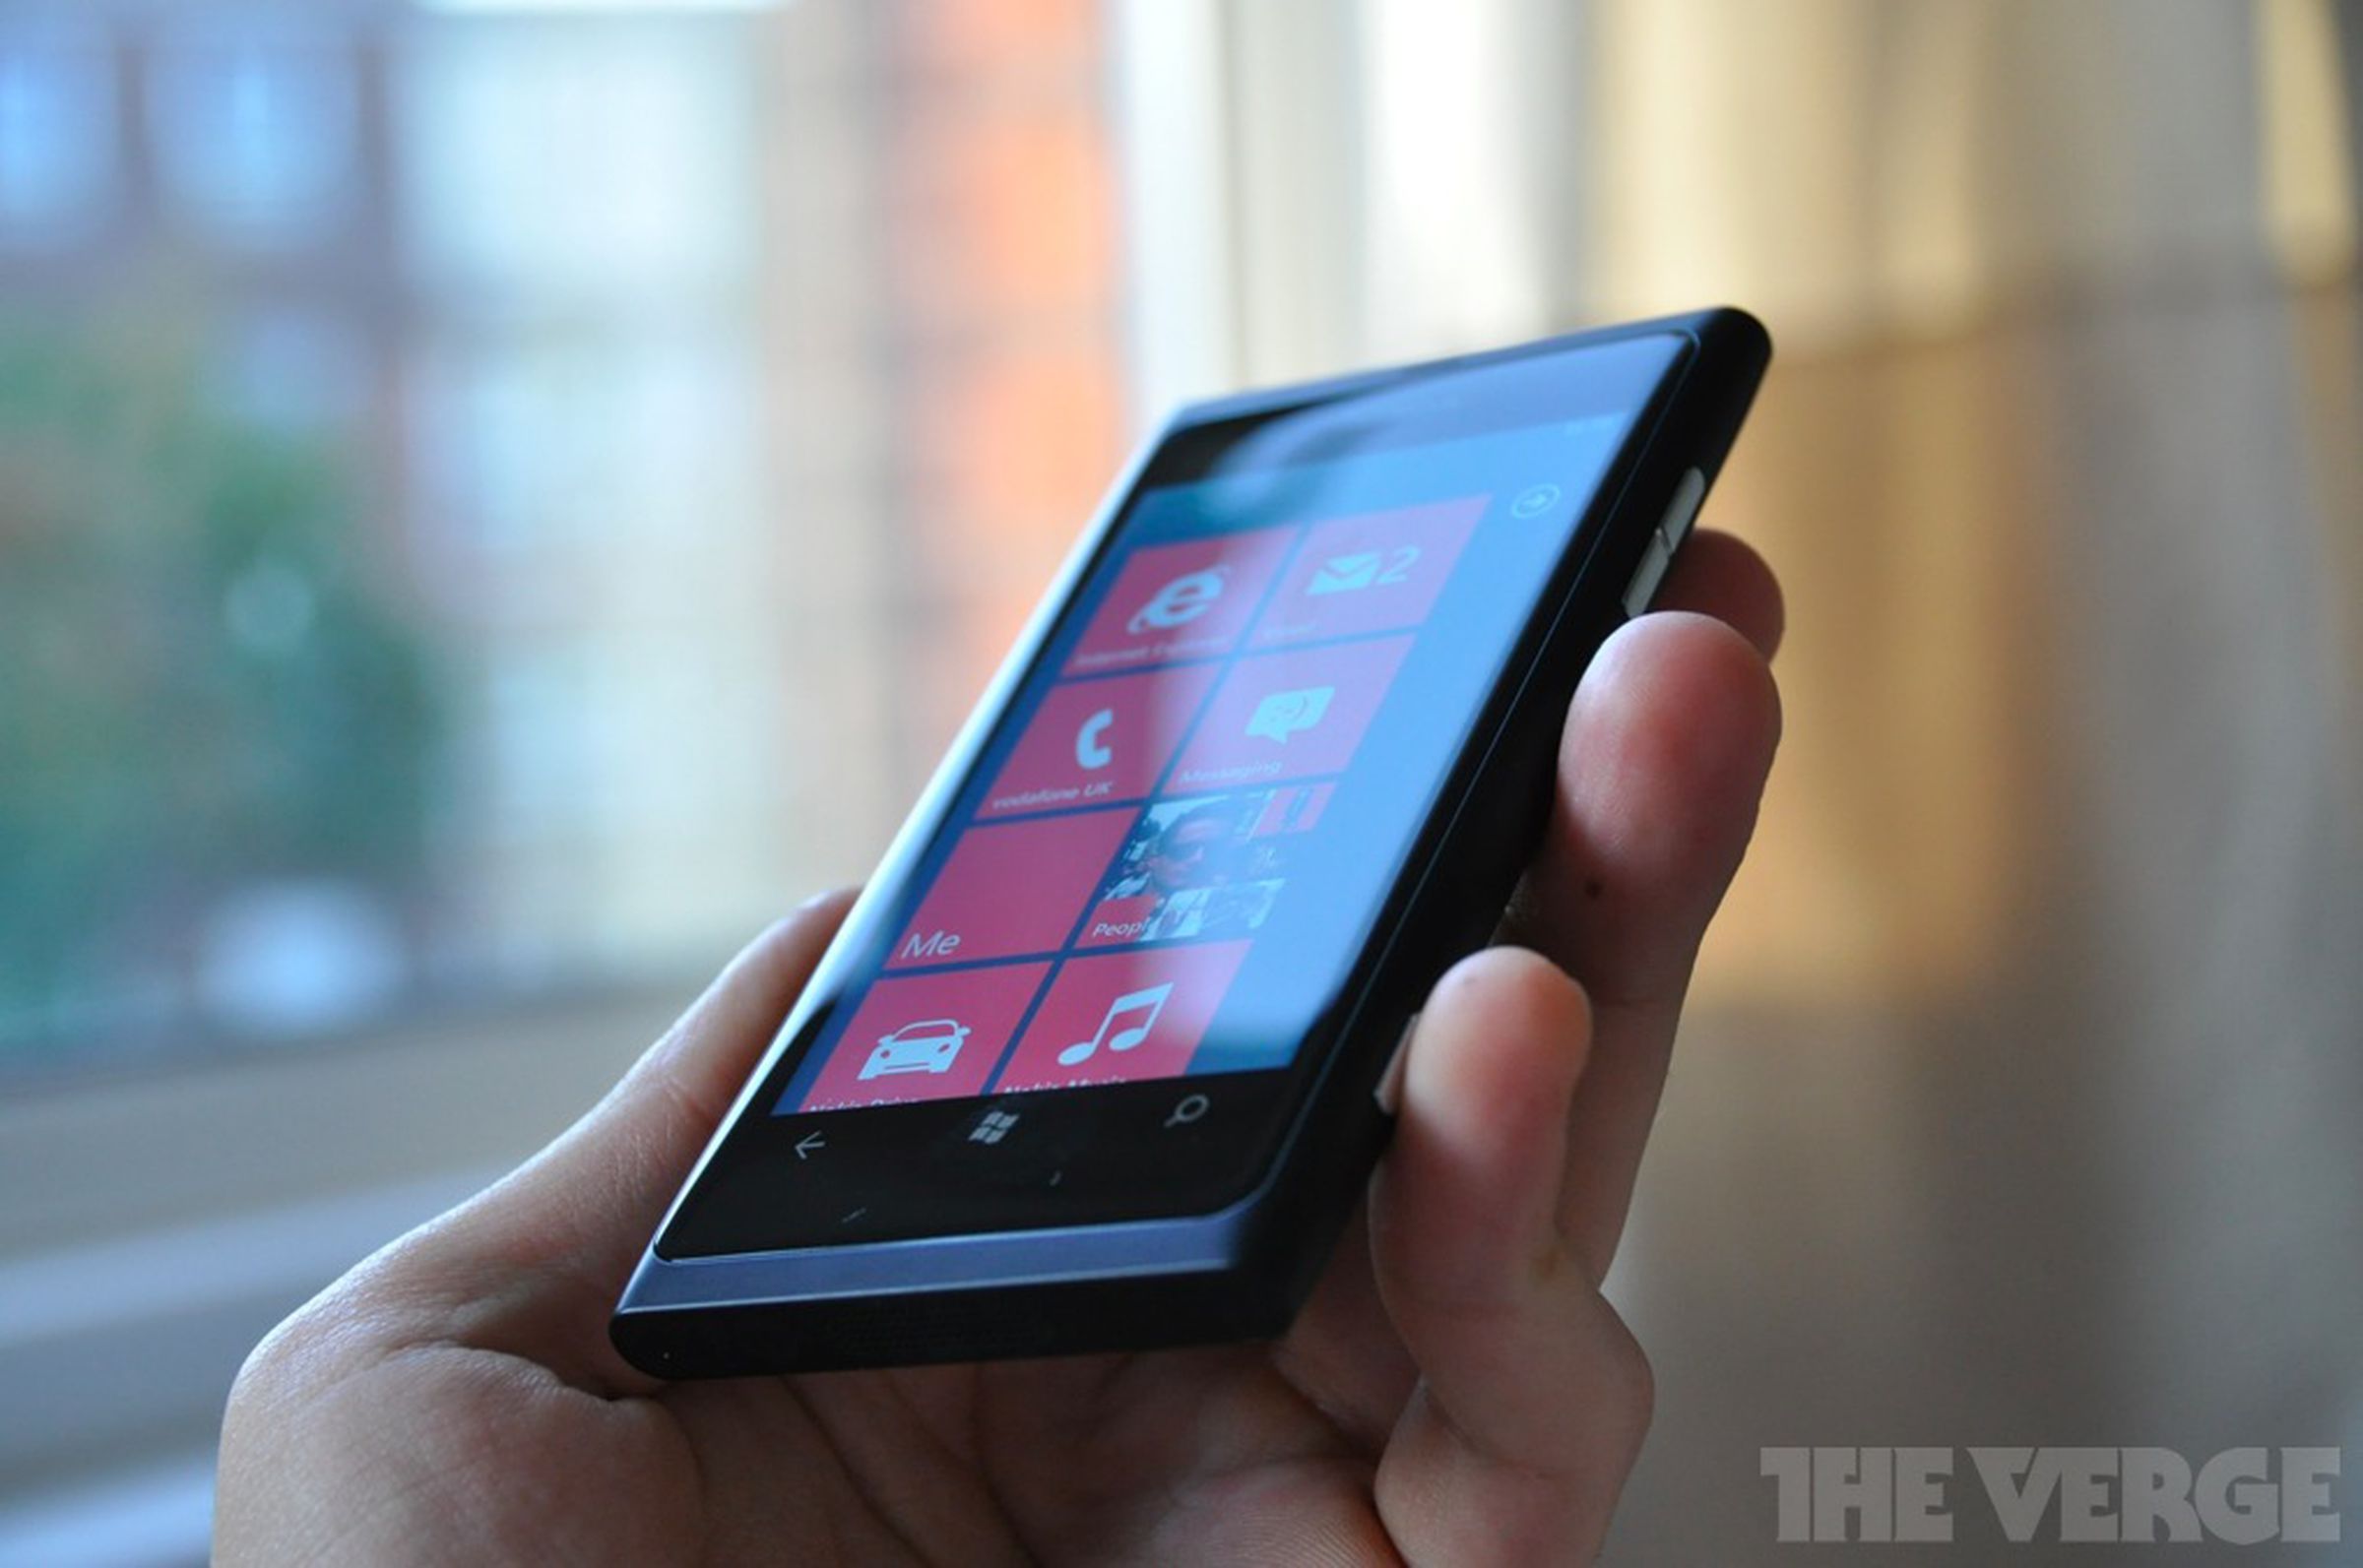 Lumia 800 display